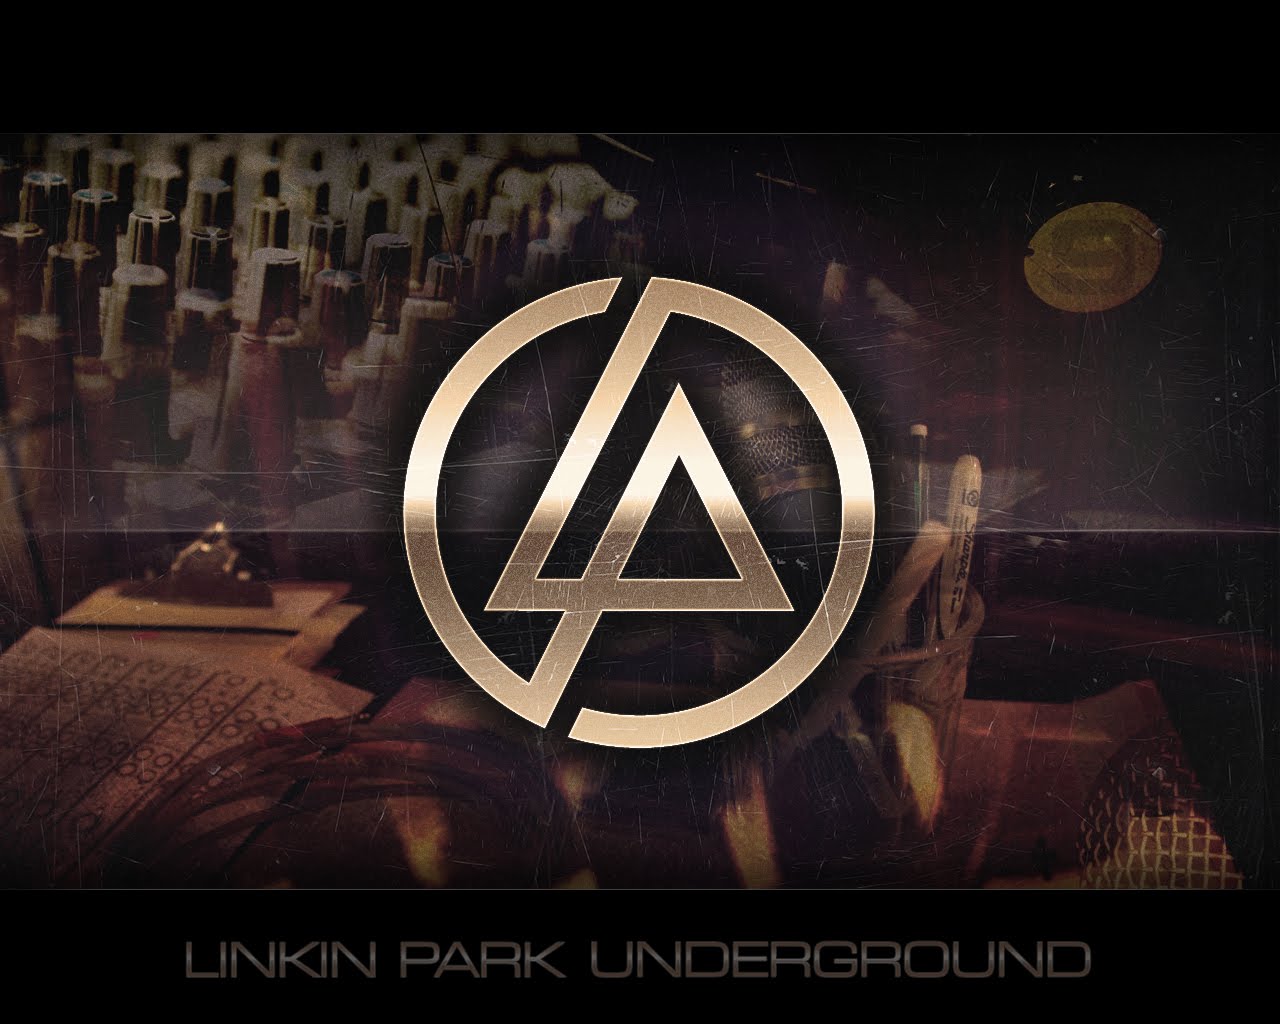 Linkin park valentine's. Linkin Park обои. Linkin Park Valentine's Day. Linkin Park LP Underground 1. Linkin Park logo 1280x1024.